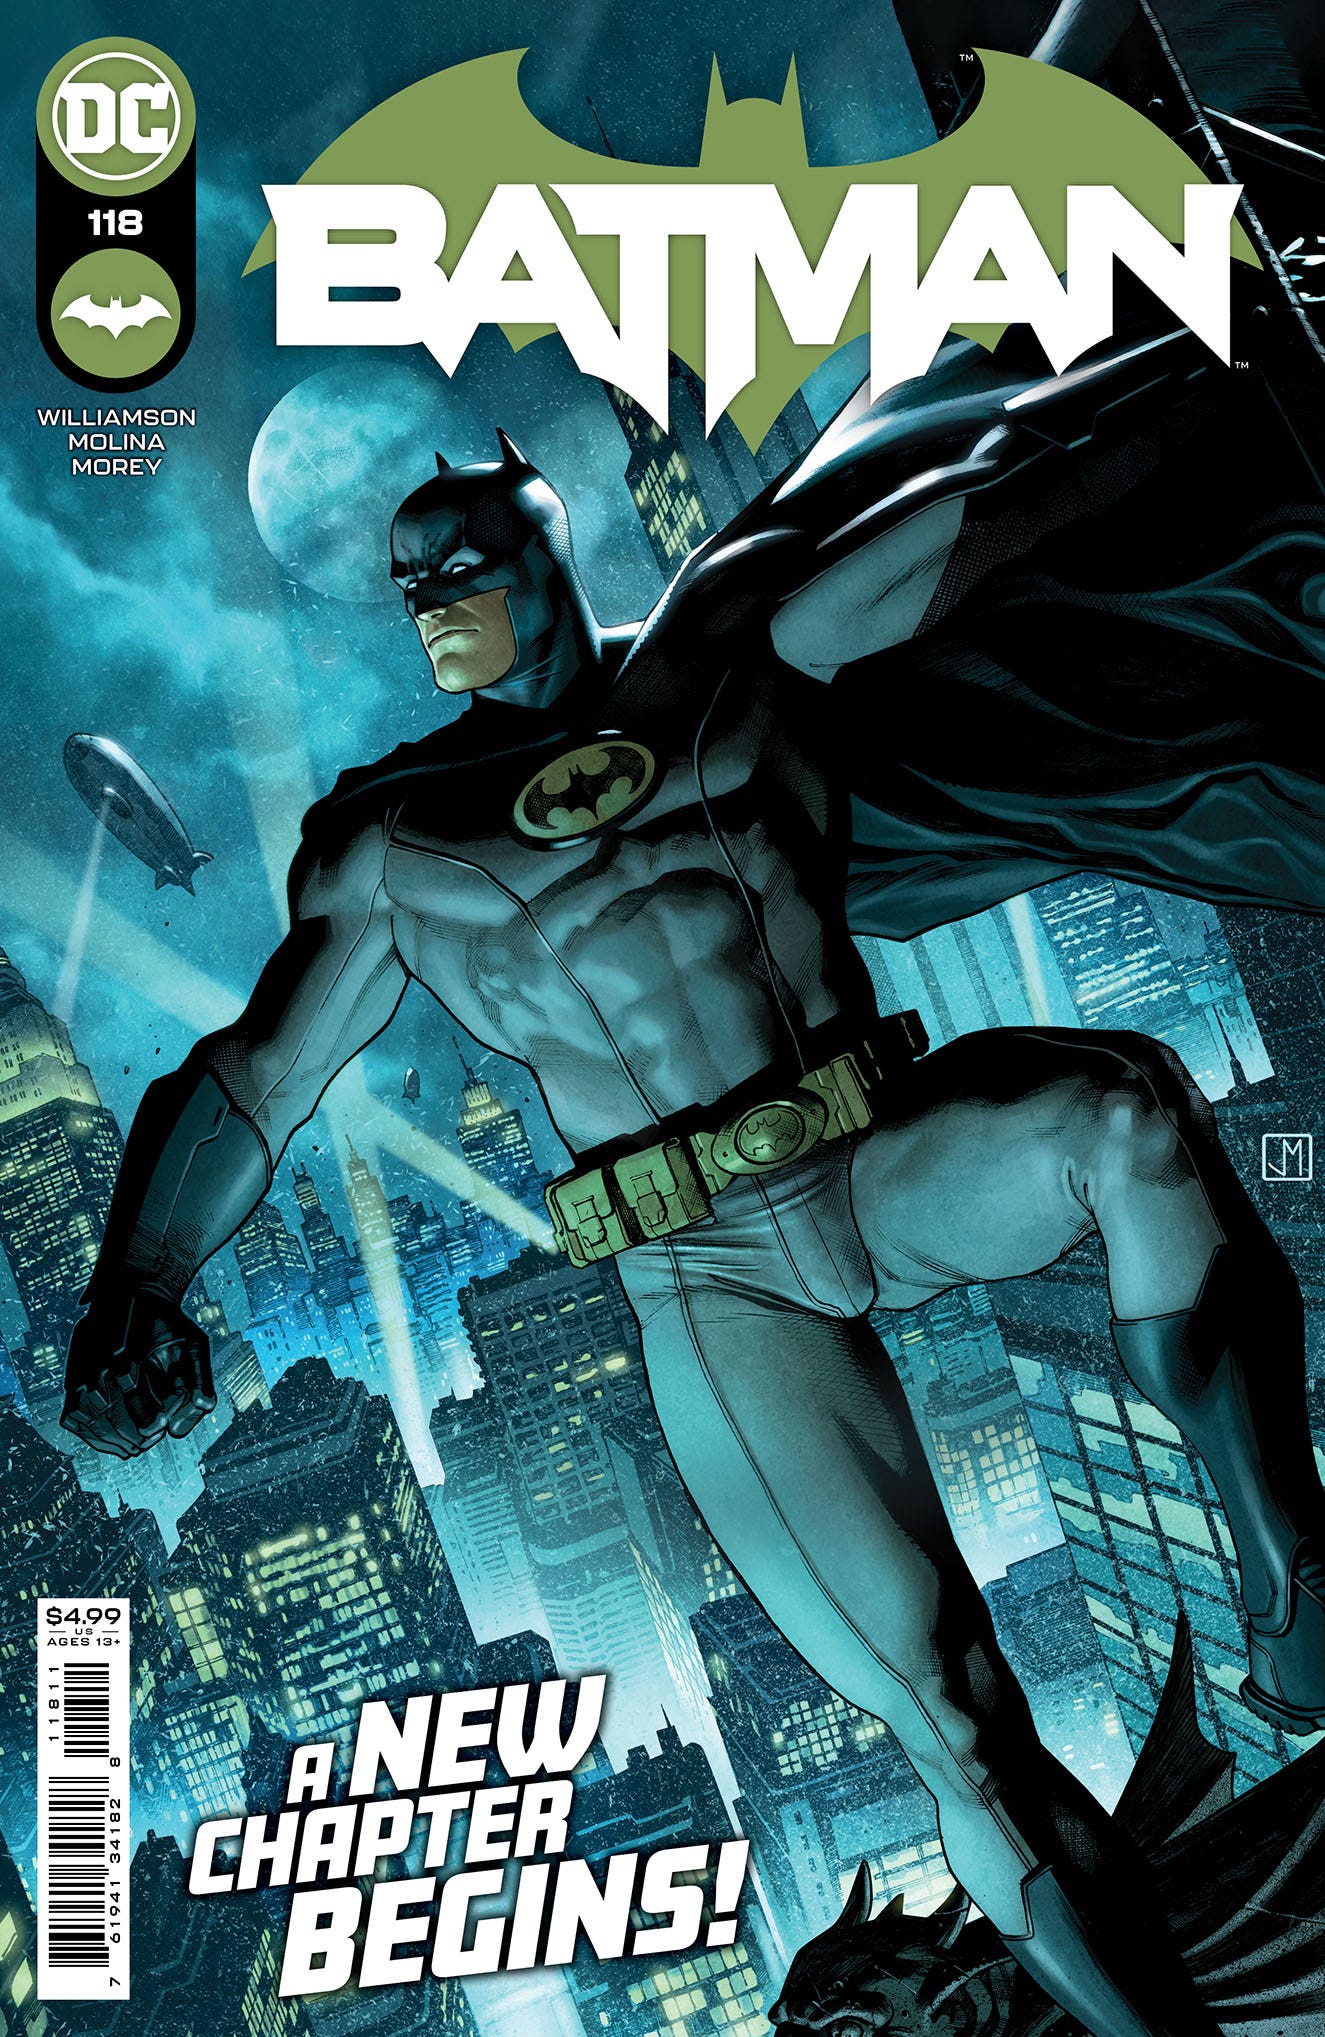 New Batman Writer Announced!! - by Blake Scott Ball